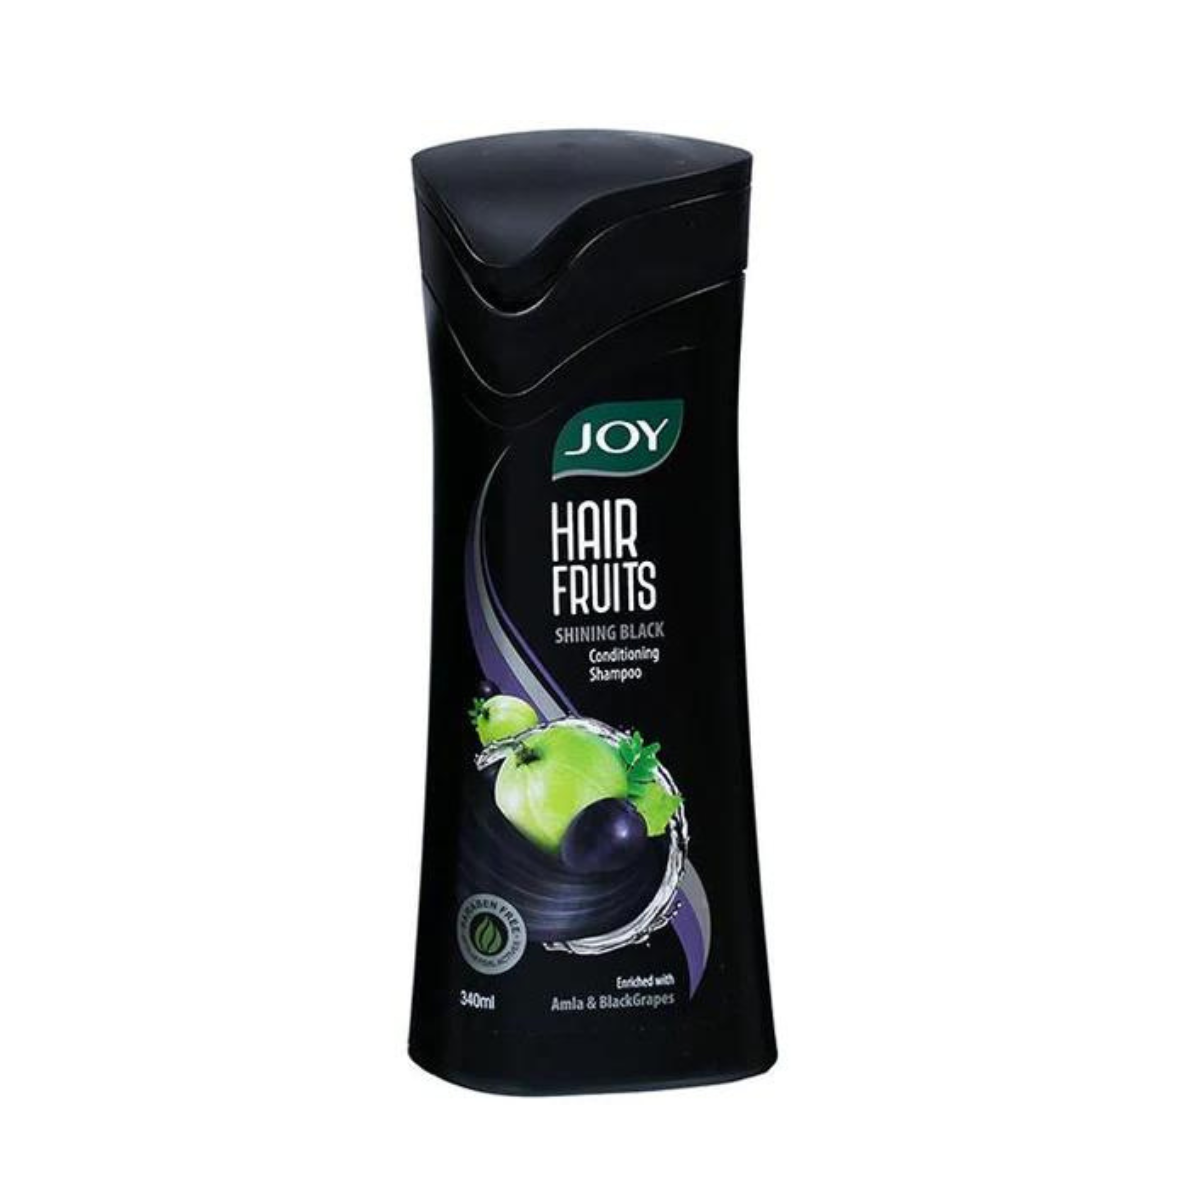 Joy Hair Fruits - Shining Black Conditioning Shampoo - Amla & Black Grapes- 340ml